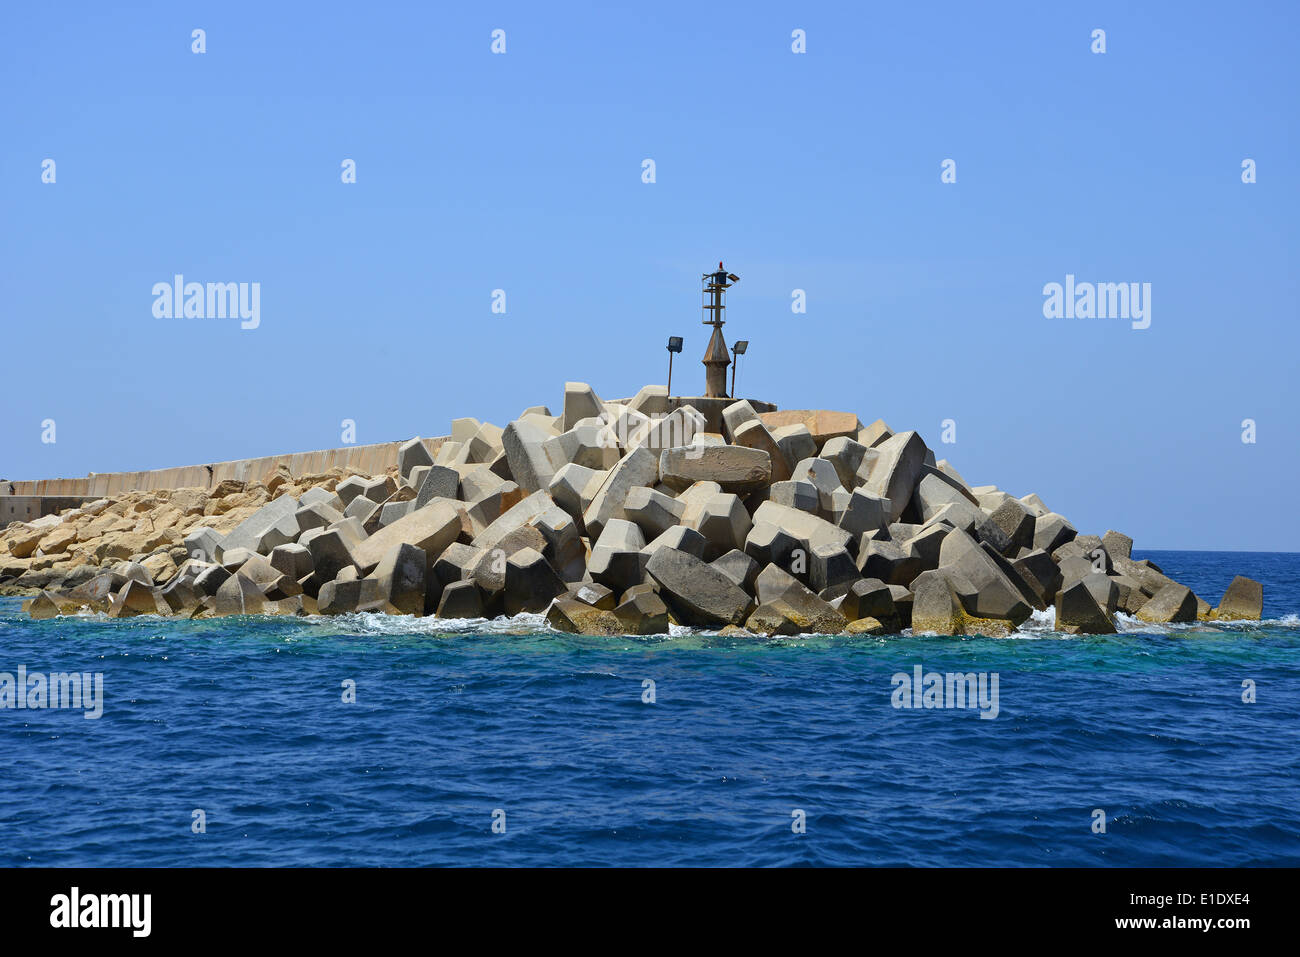 Concrete block waterbreak, Cirkewwa Ferry Terminal, Paradise Bay, Northern District, Malta Majjistral Region, Republic of Malta Stock Photo